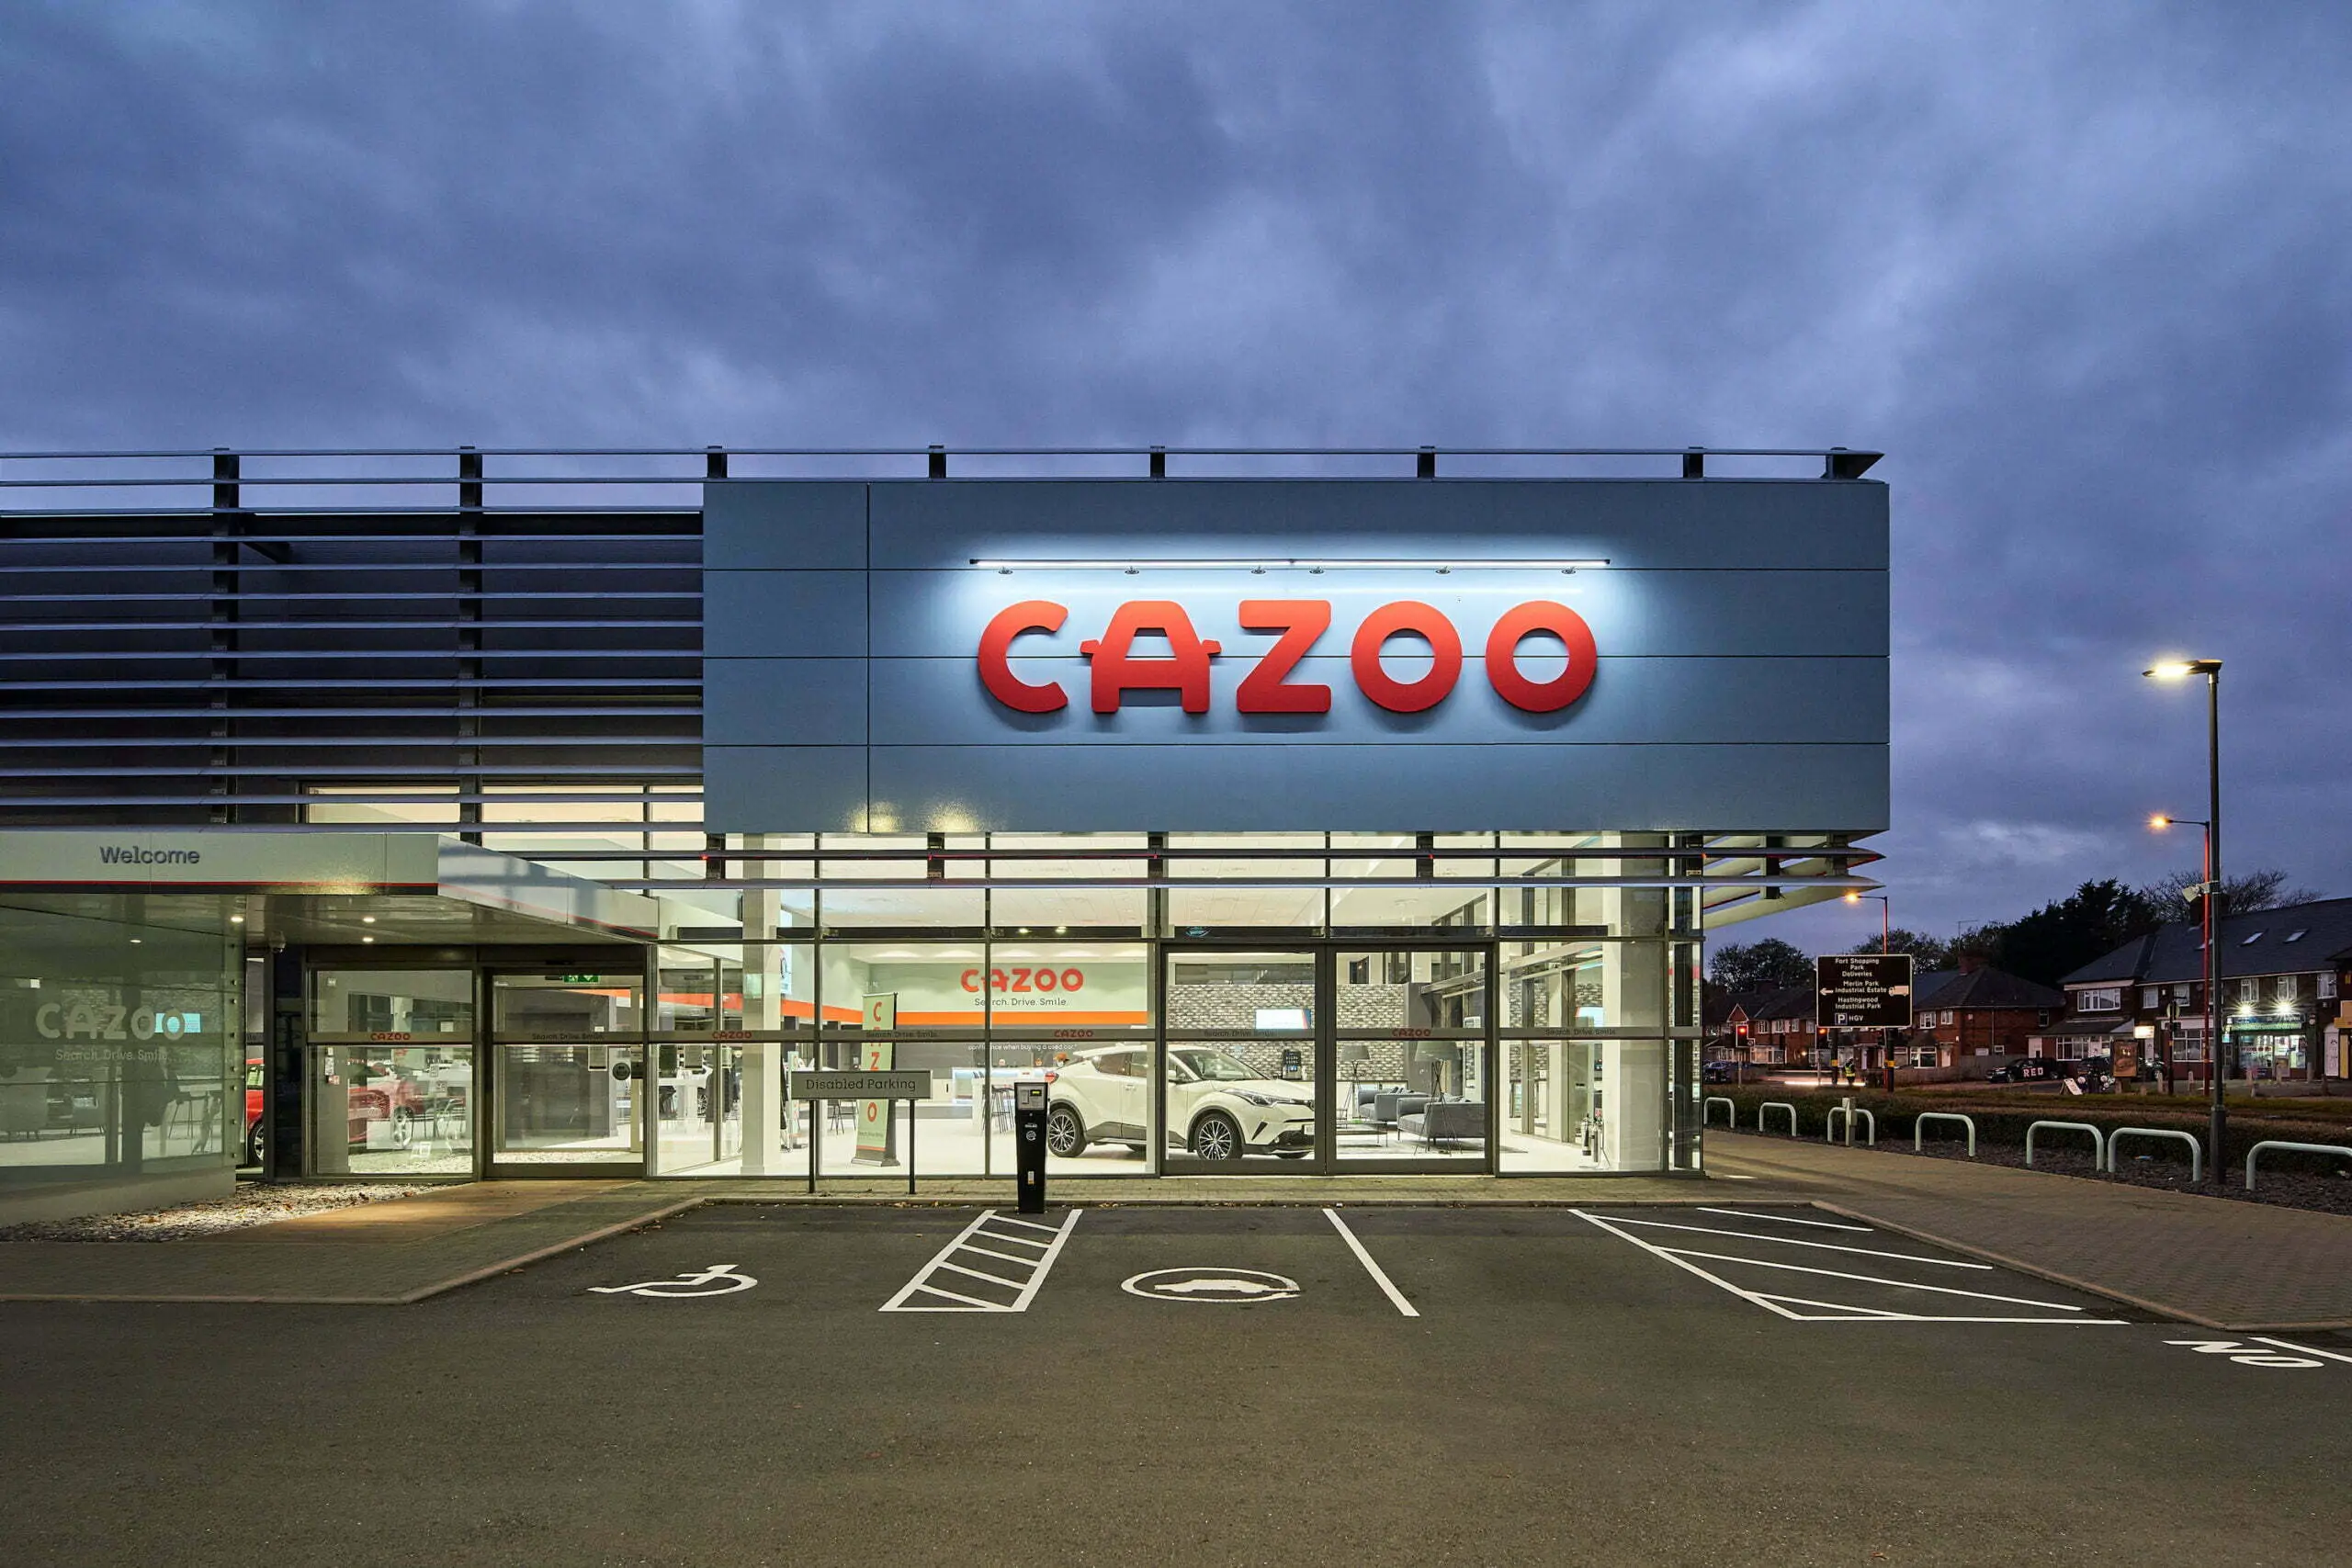 Cazoo Business Model | The Brand Hopper